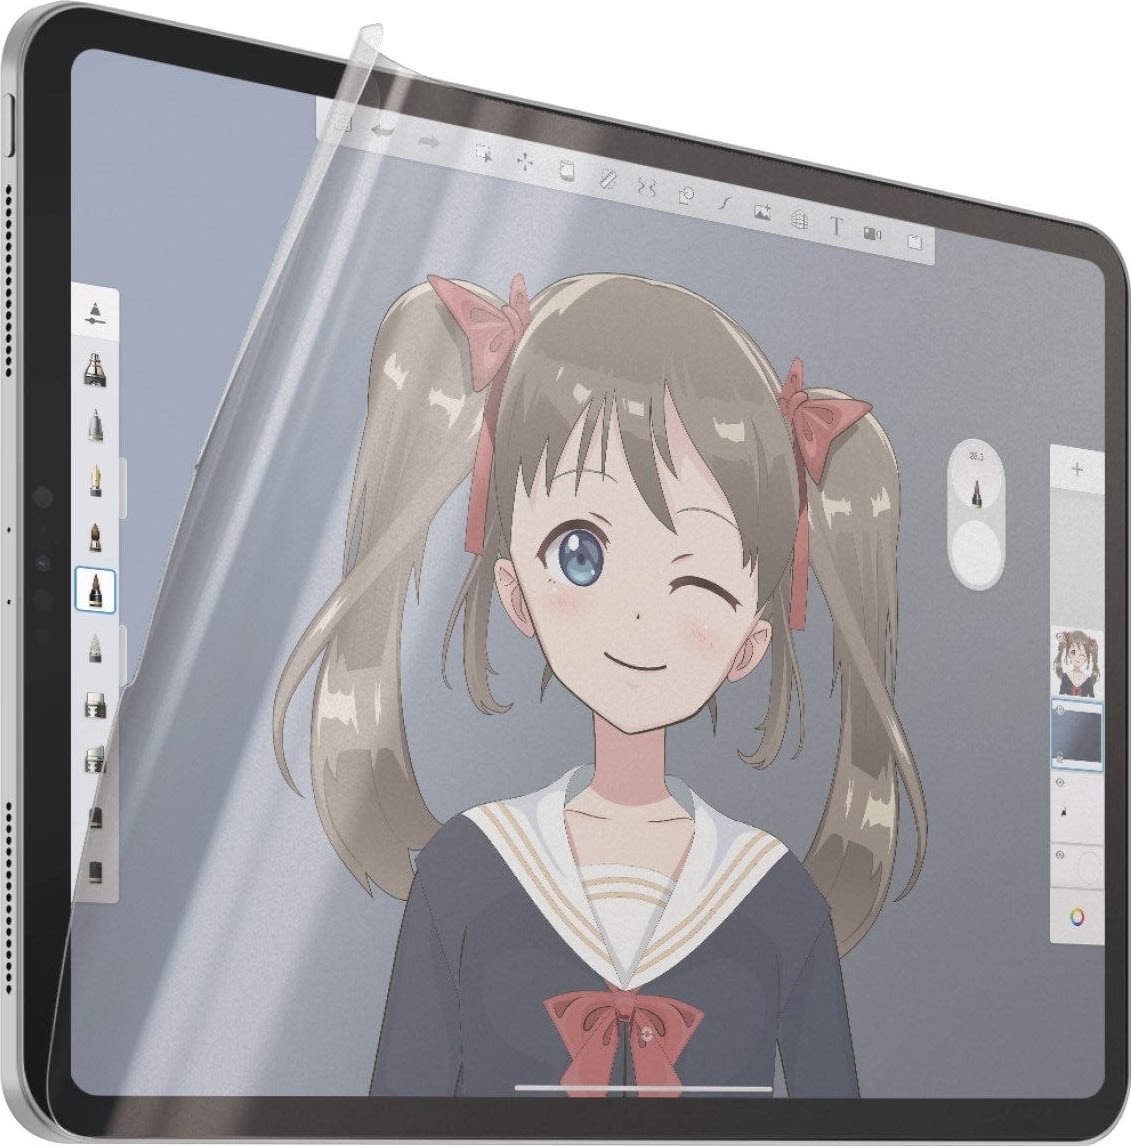 PanzerrGlass UWF GraphicPaper iPad Pro 11”